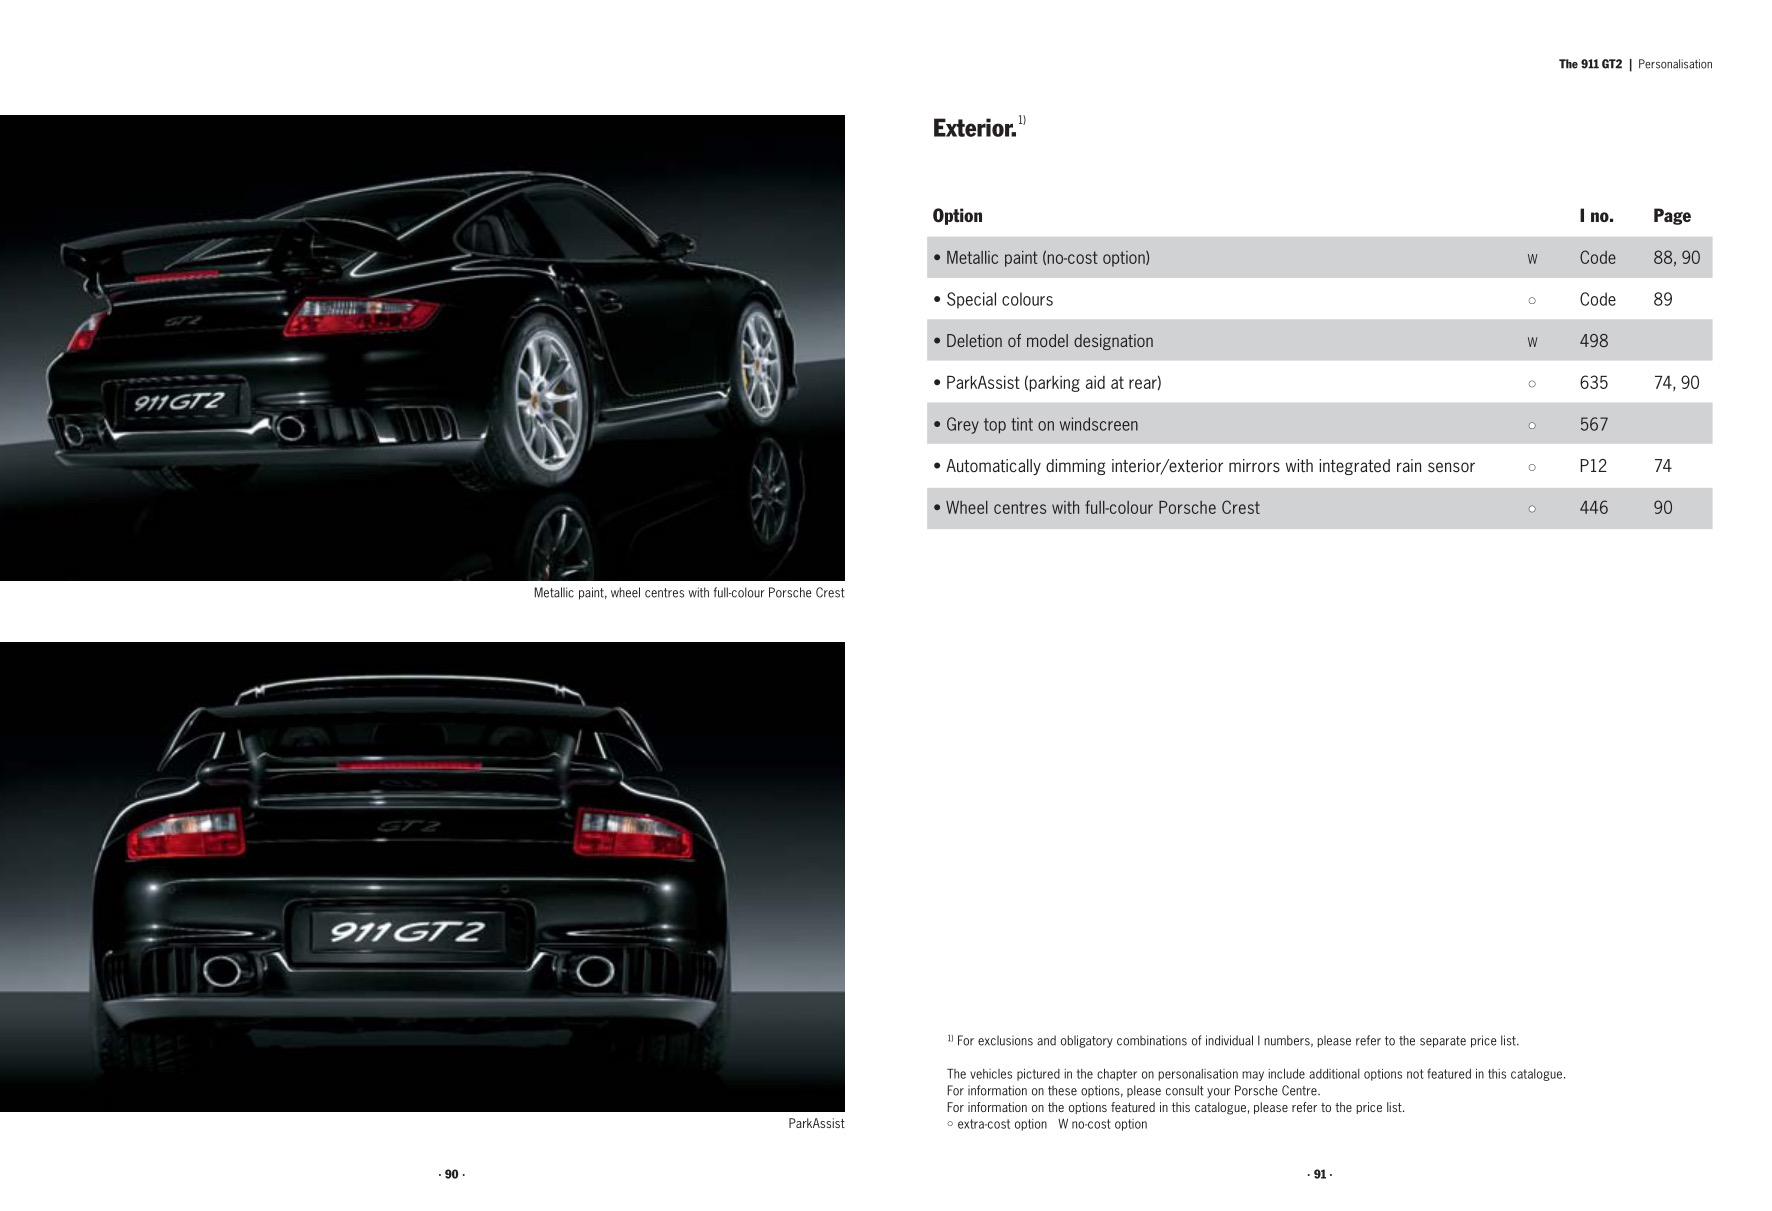 2008 Porsche 911 GT2 Brochure Page 2